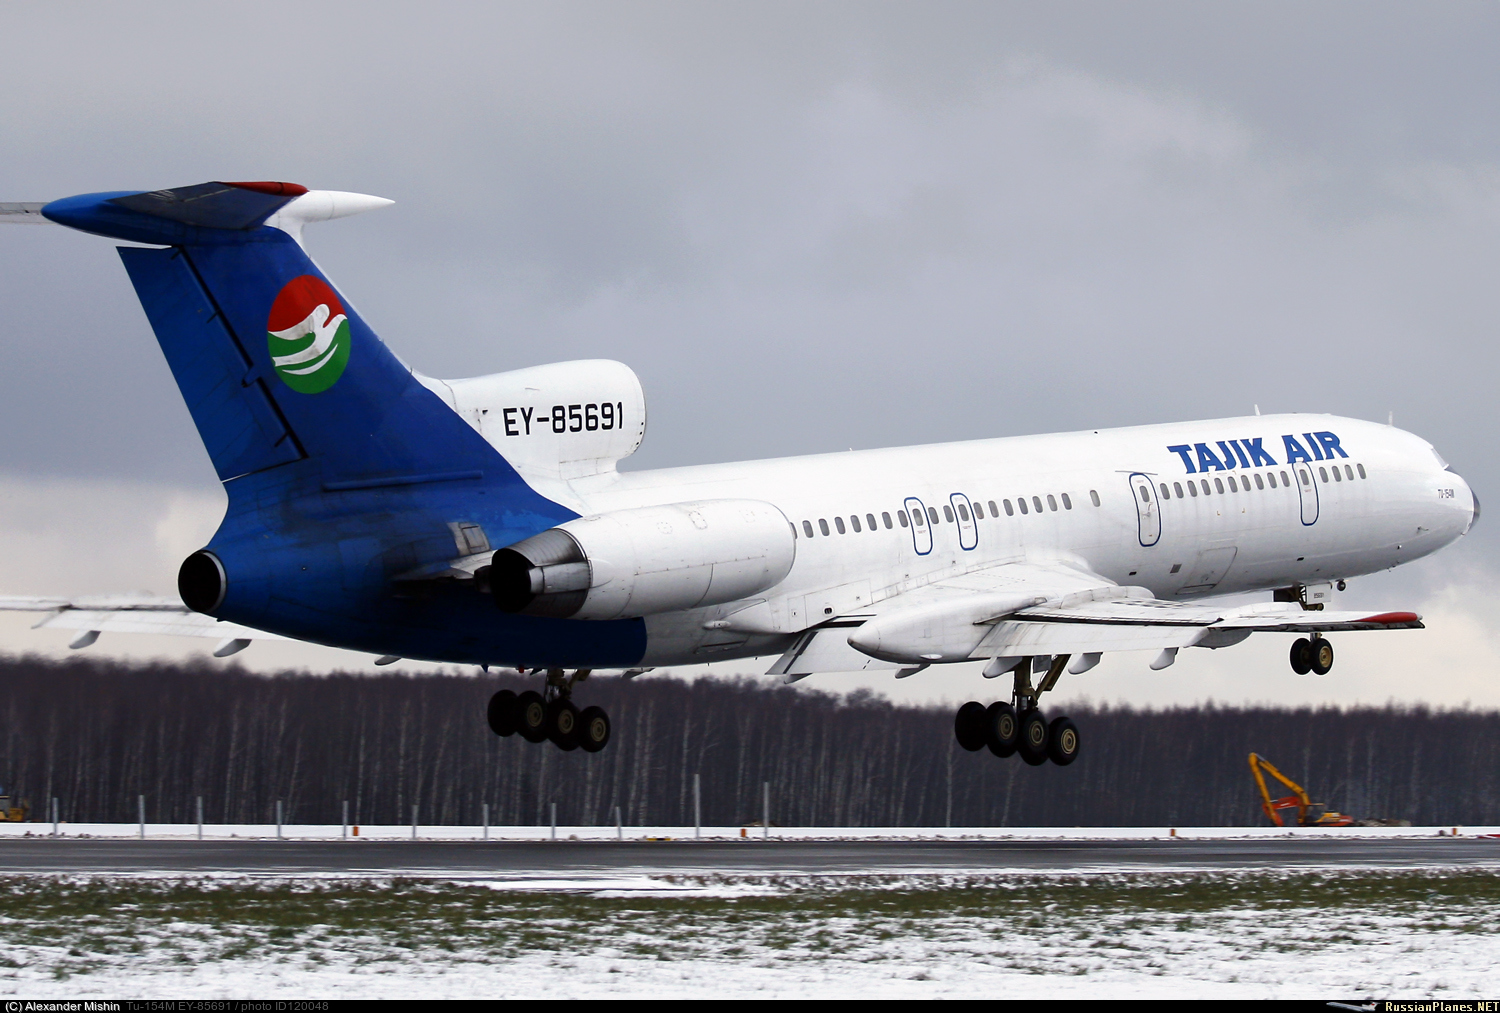 The air foro. Авиакомпания Tajik Air. Ту-154 м таджик Эйр. Самолёт Таджикистана таджик АИР. Самолет ту 154 б таджик айр.